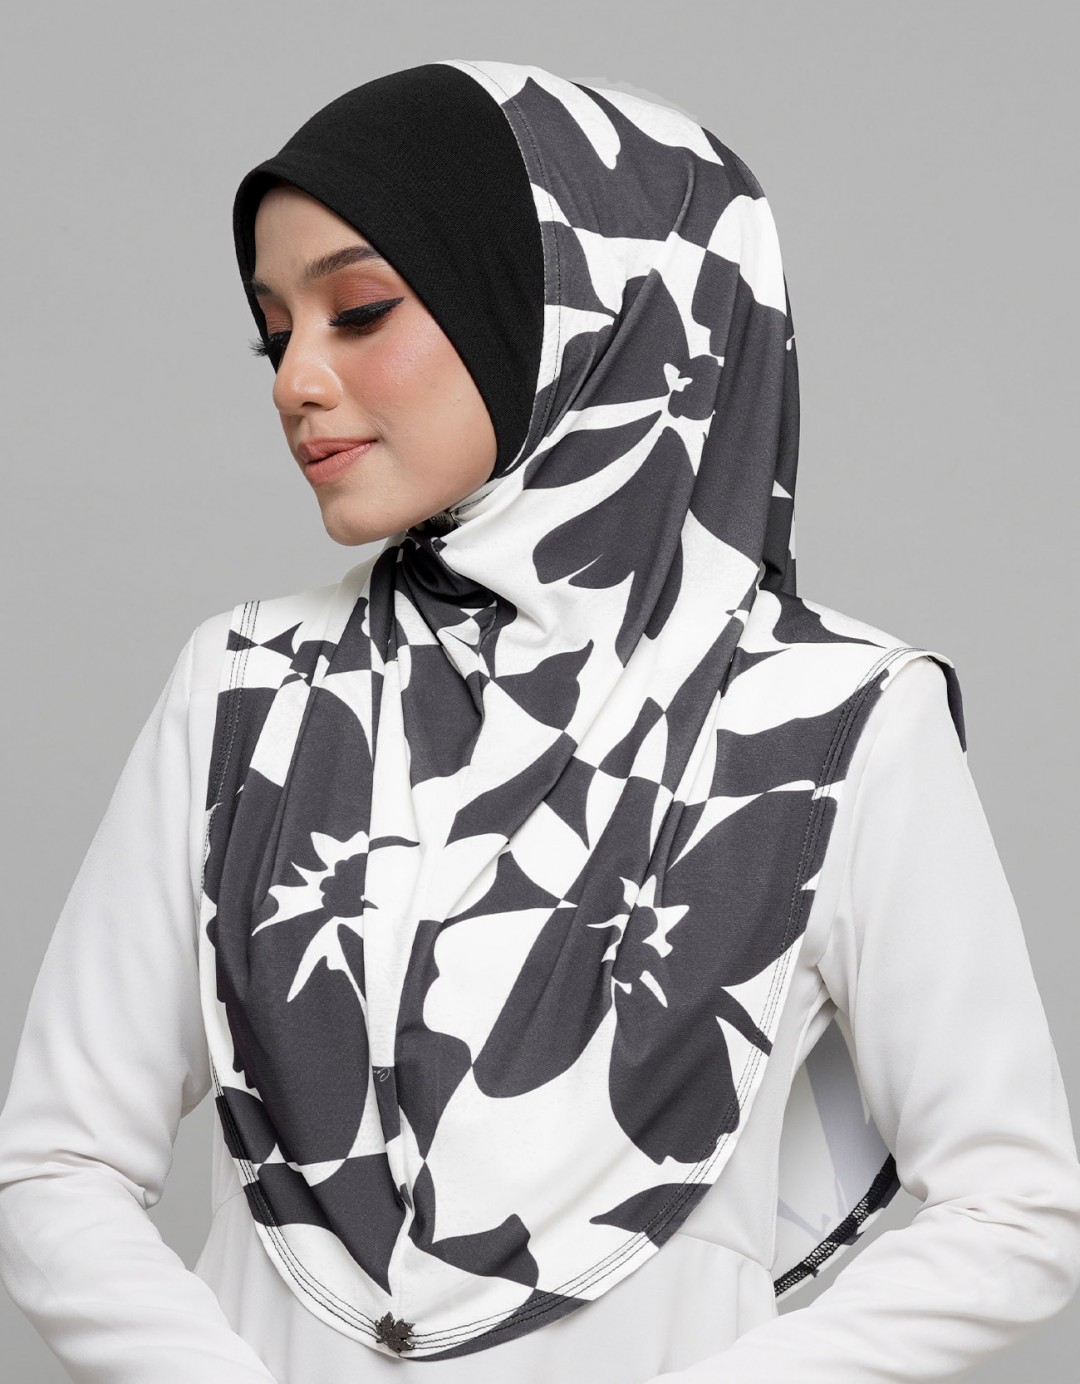 Express Hijab Damia Signature 12 - Black Edition